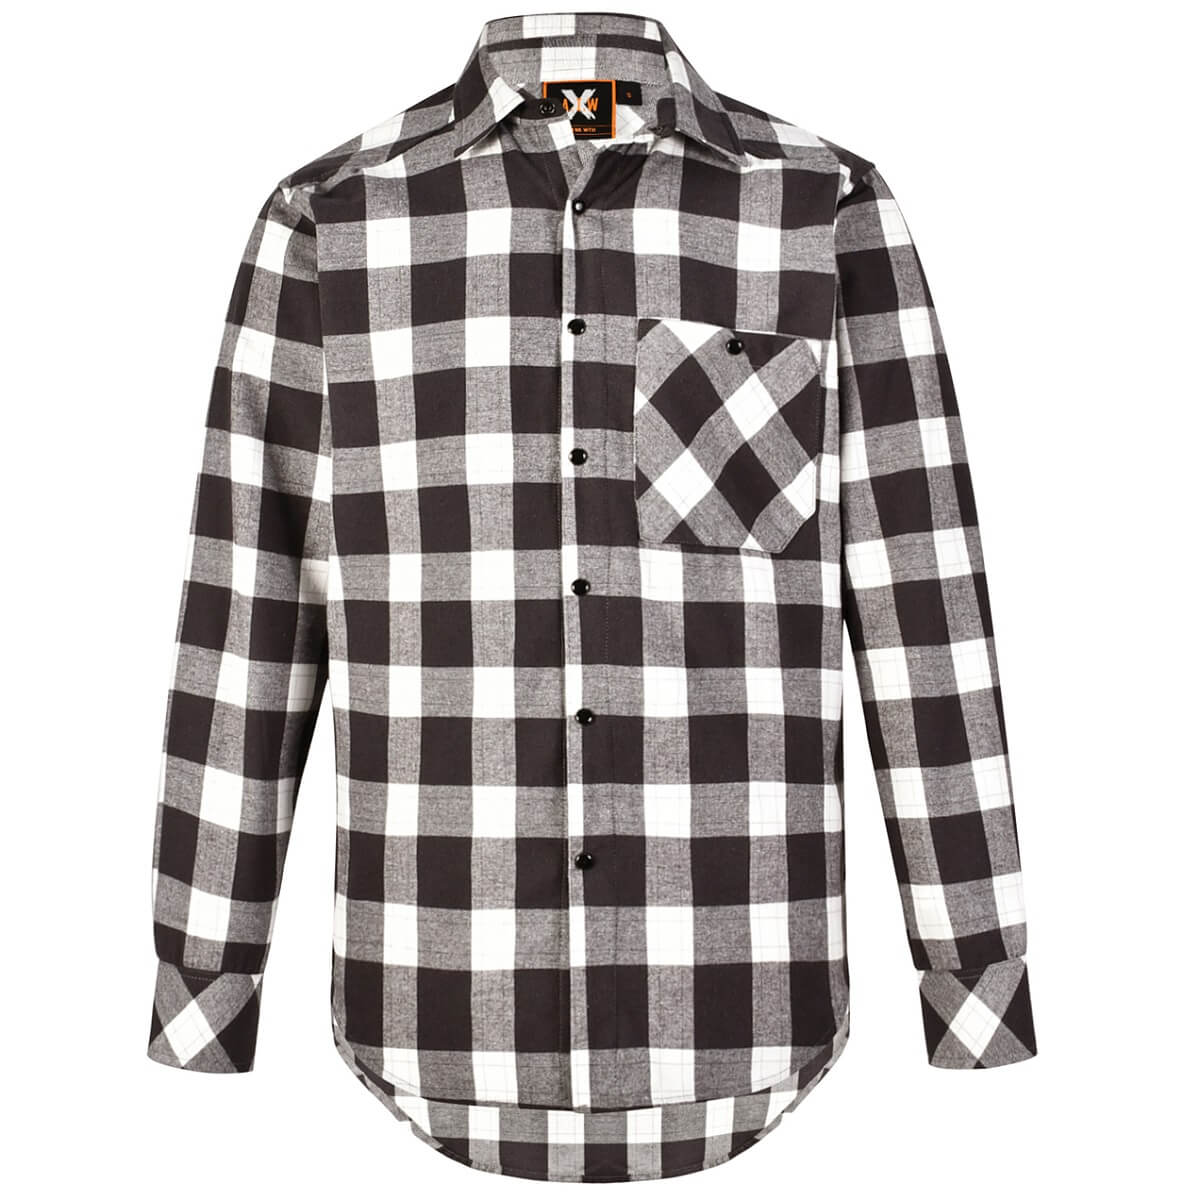 WT11 - Unisex Classic Flannel Plaid Shirt